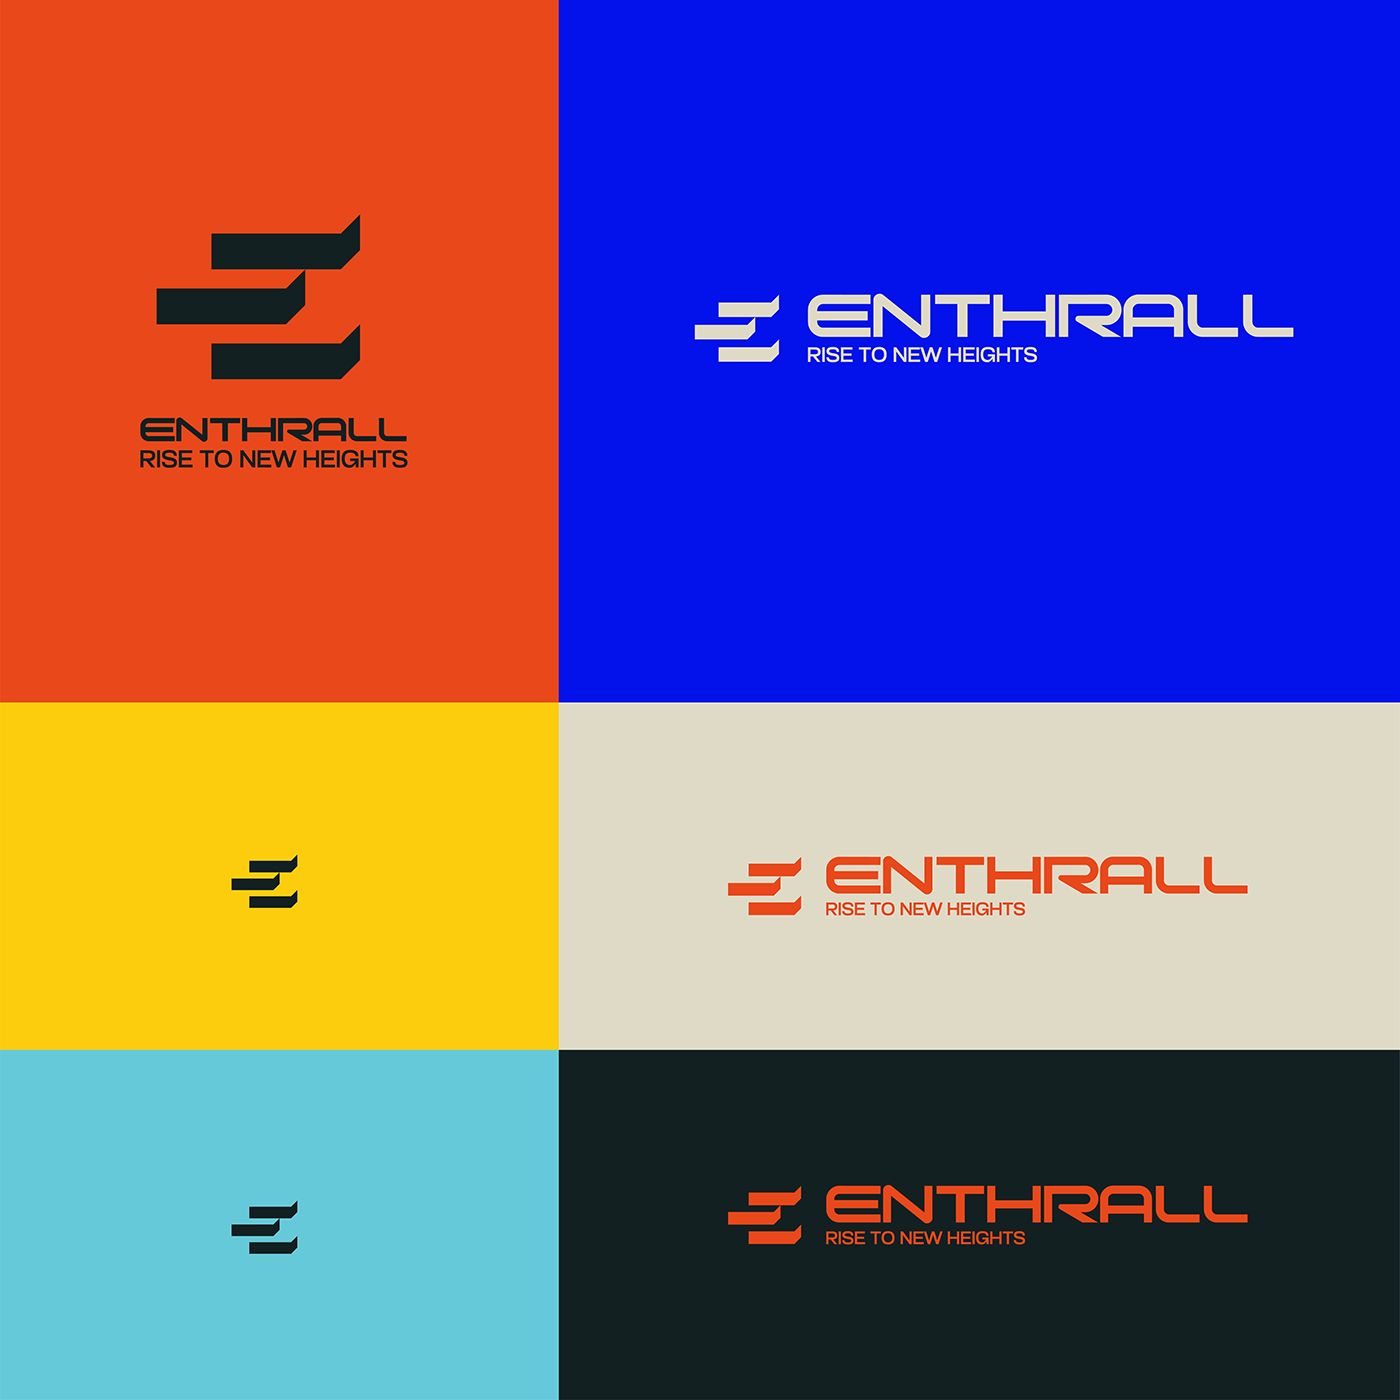 rebranding brand identity minimalist logo visual identity Edtech Startups